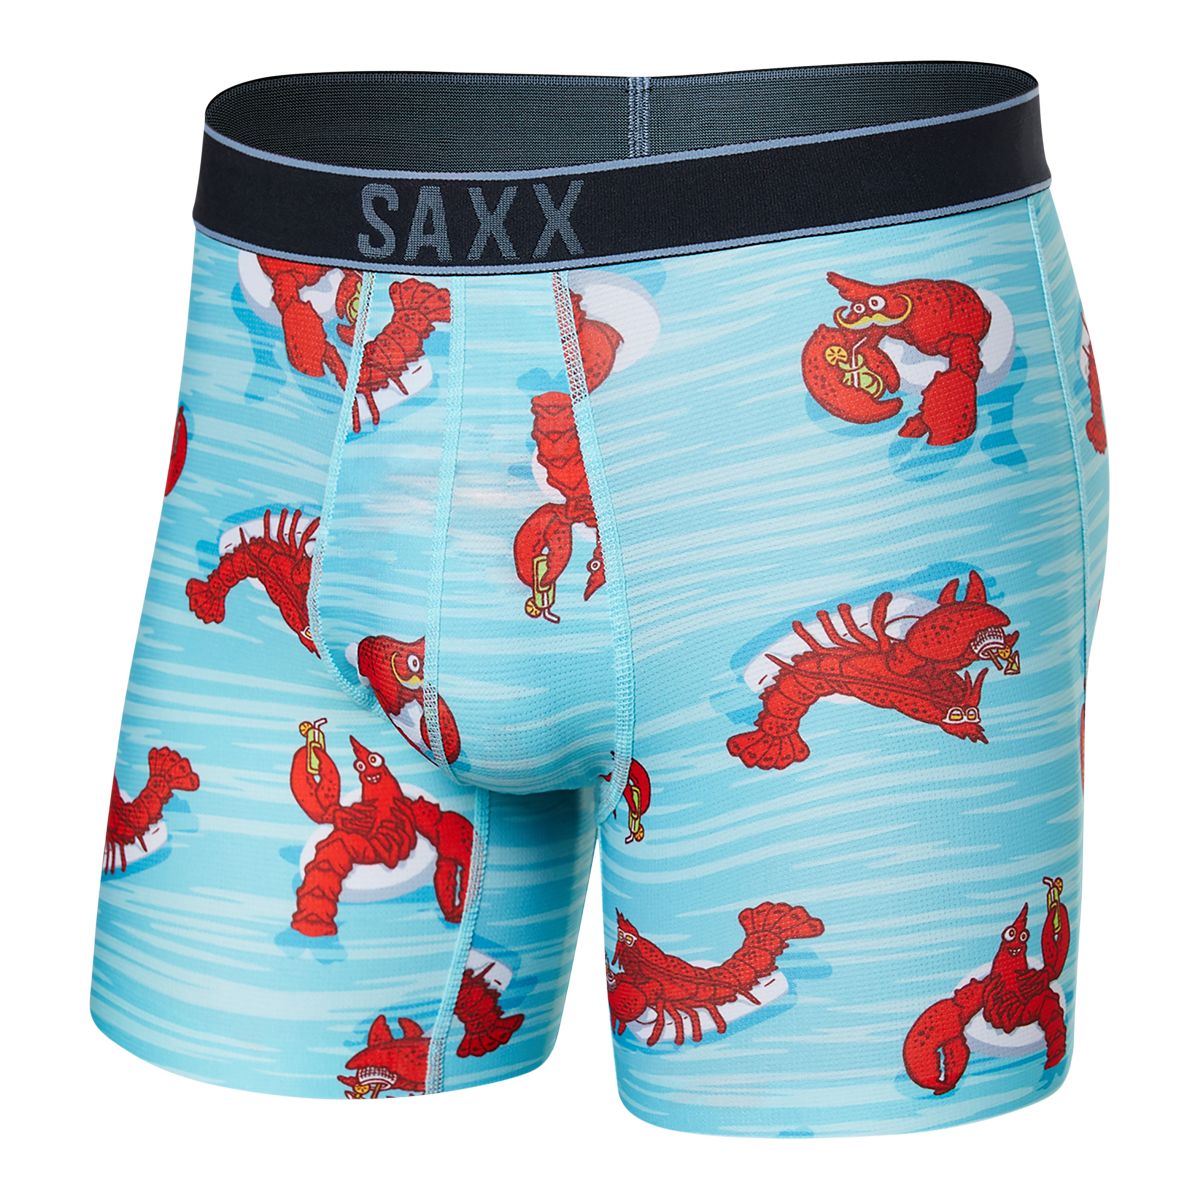 SAXX Vibe Men's Boxer Brief, Underwear, Breathable, Modern Fit